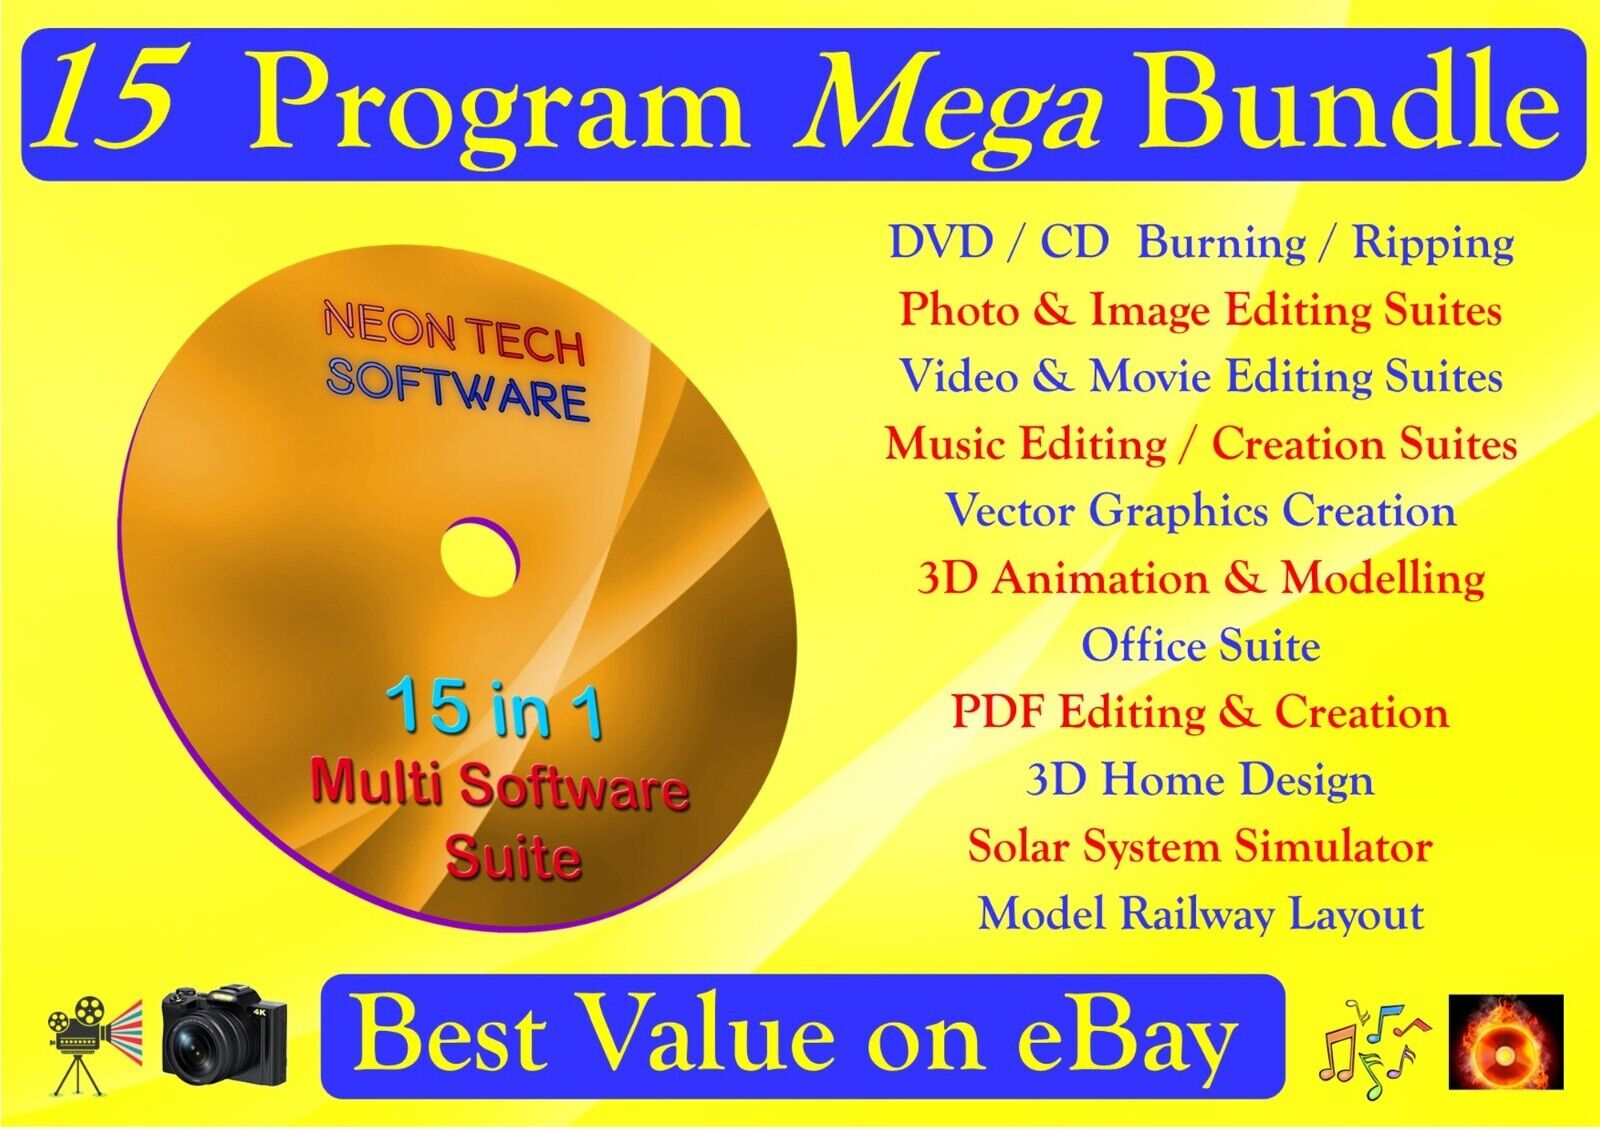 Video Editing & Movie Maker Software Part of 15 PROGRAM MEGA BUNDLE Windows DVD